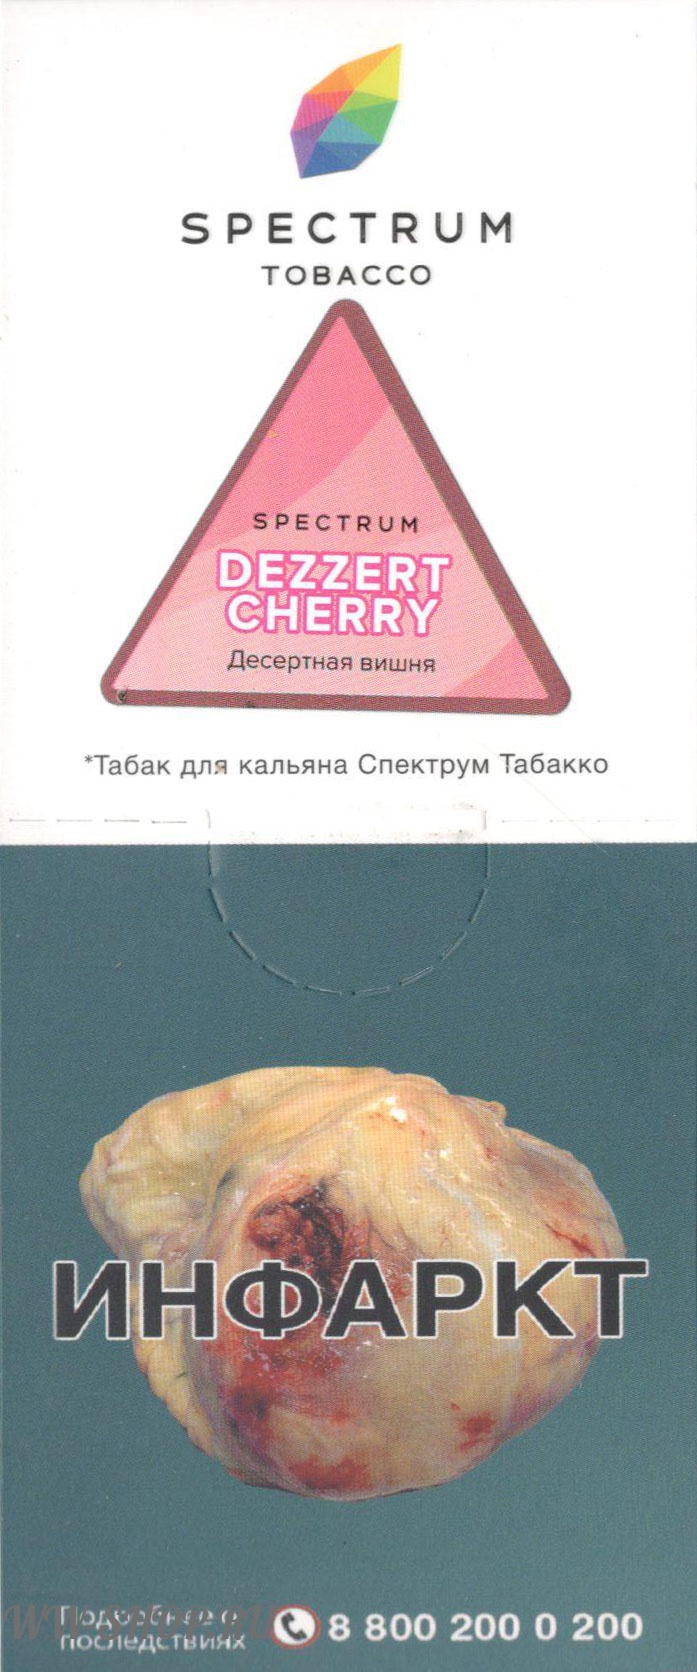 spectrum- десертная вишня (dezzert cherry) Калининград